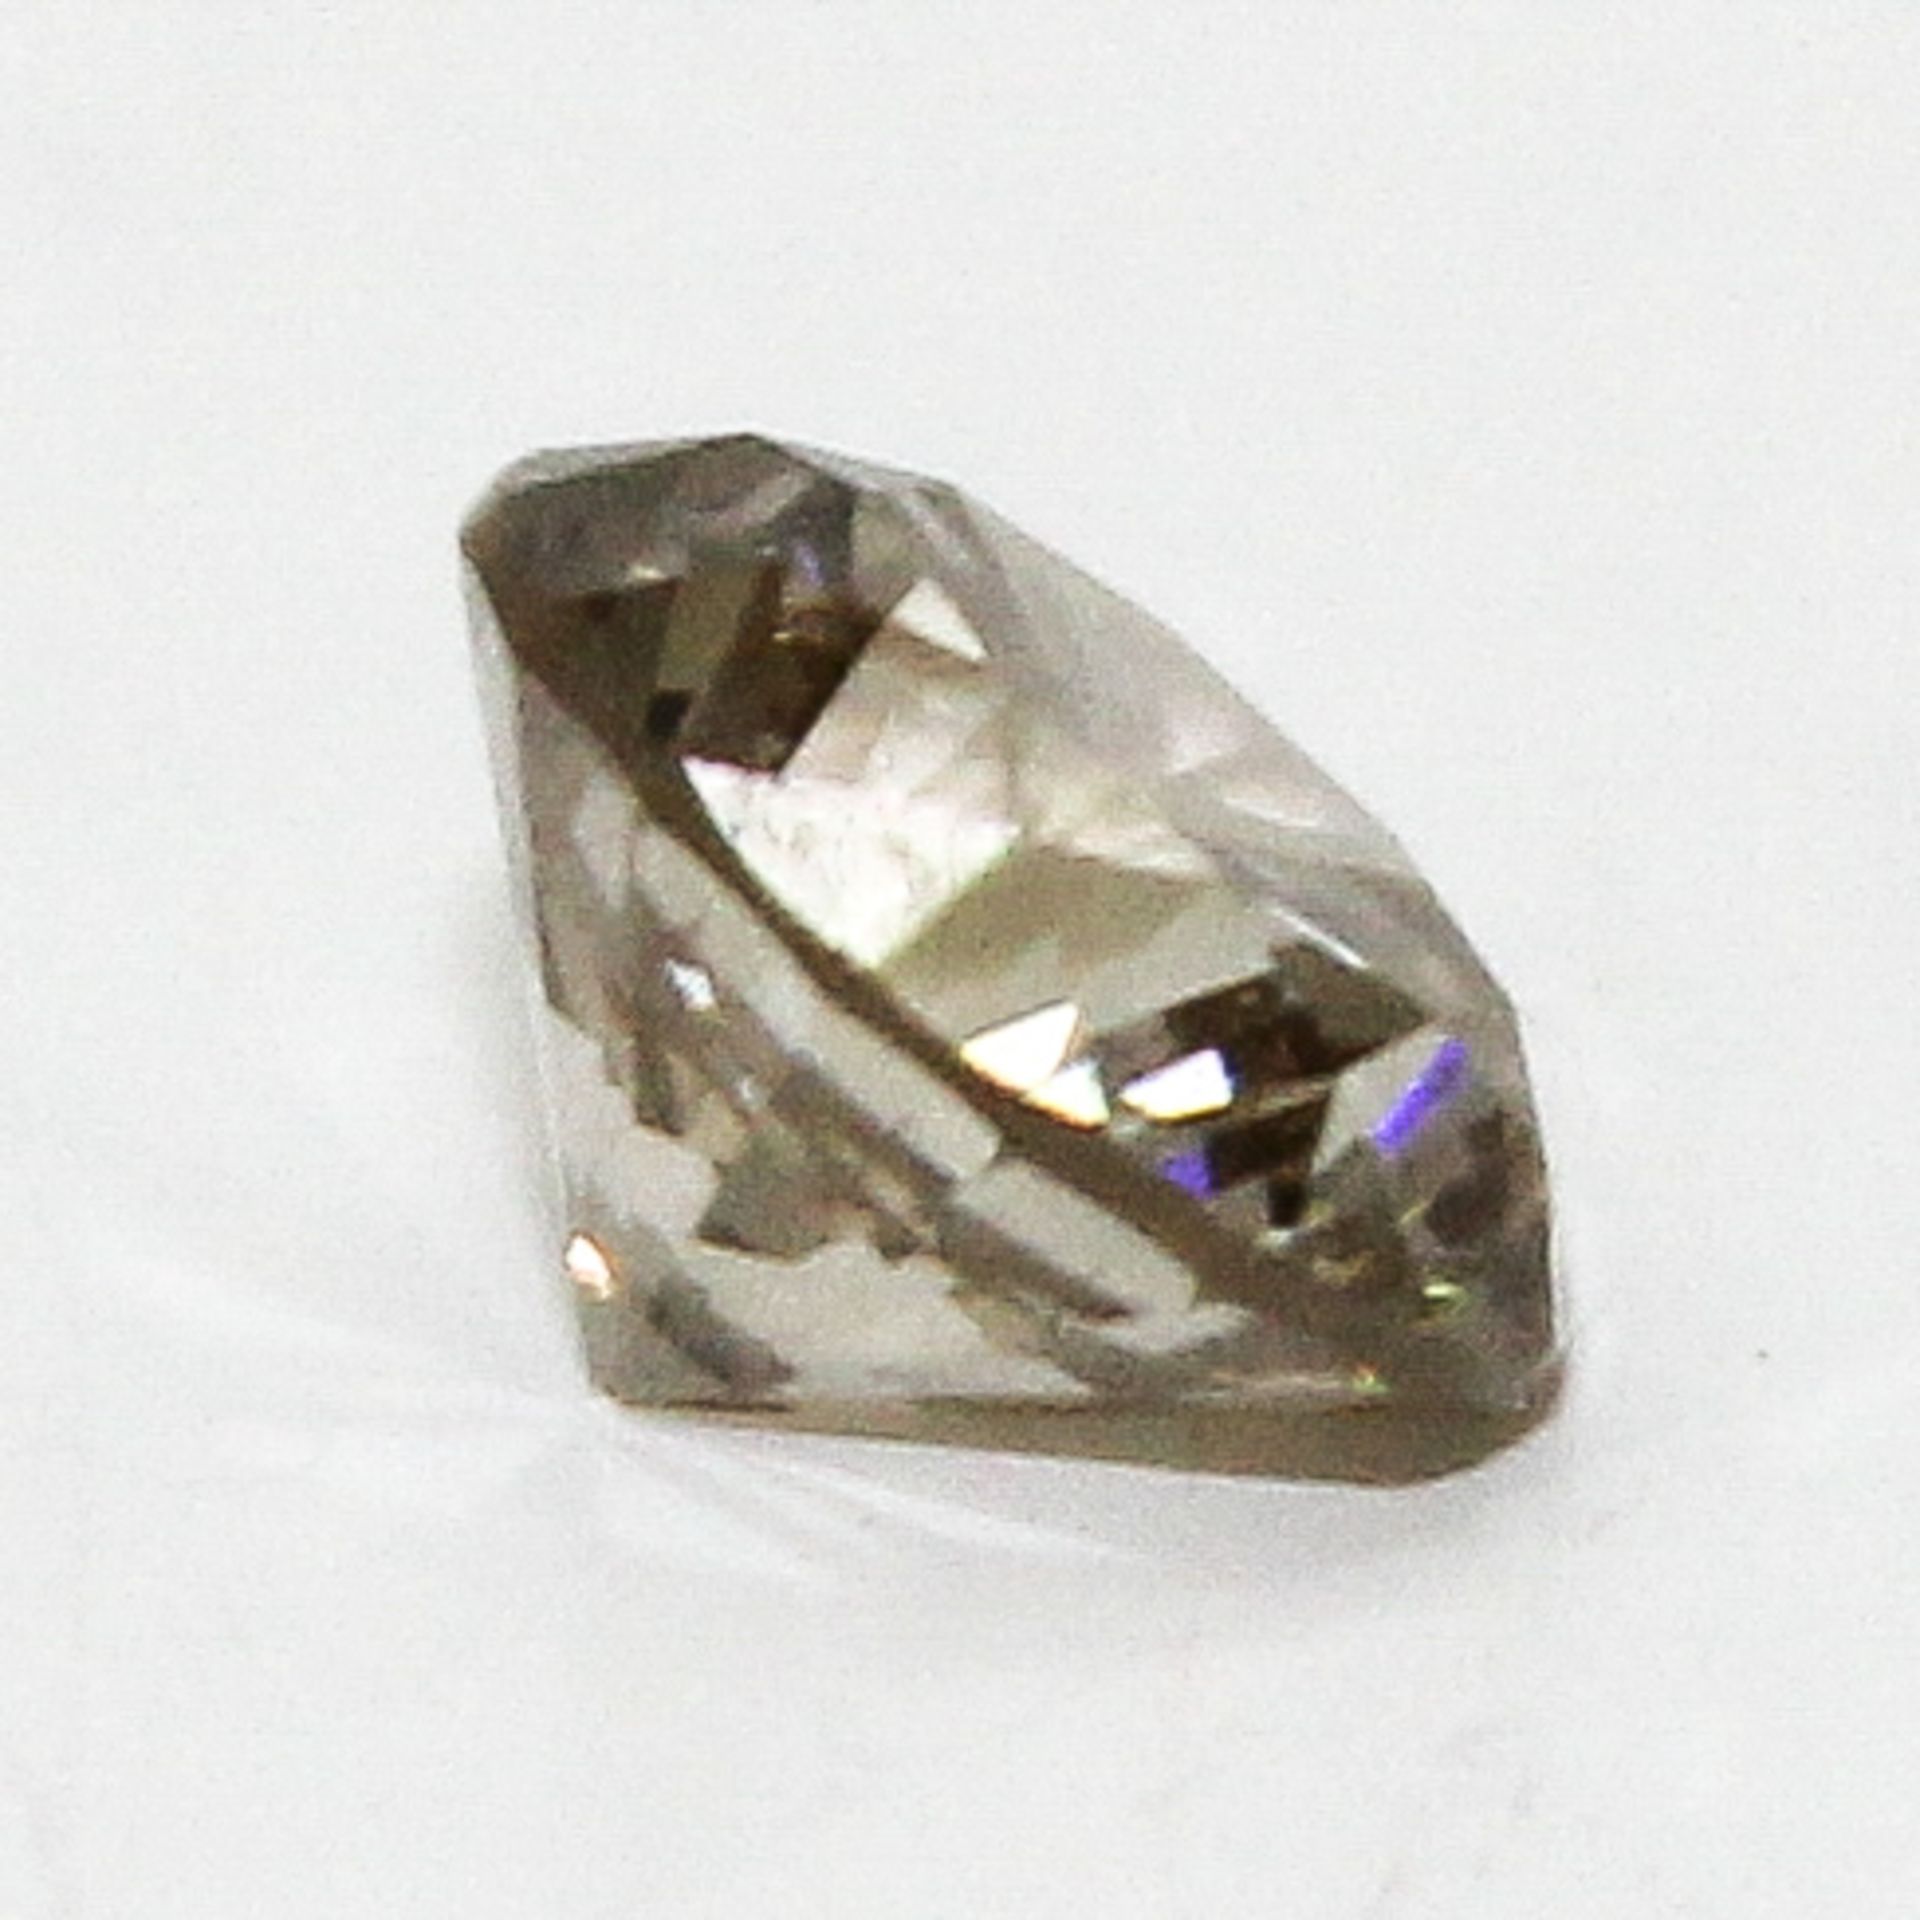 1.01 CARAT CHAMPAGNE COLORED LOOSE DIAMOND Diamond is 1.01 carat.